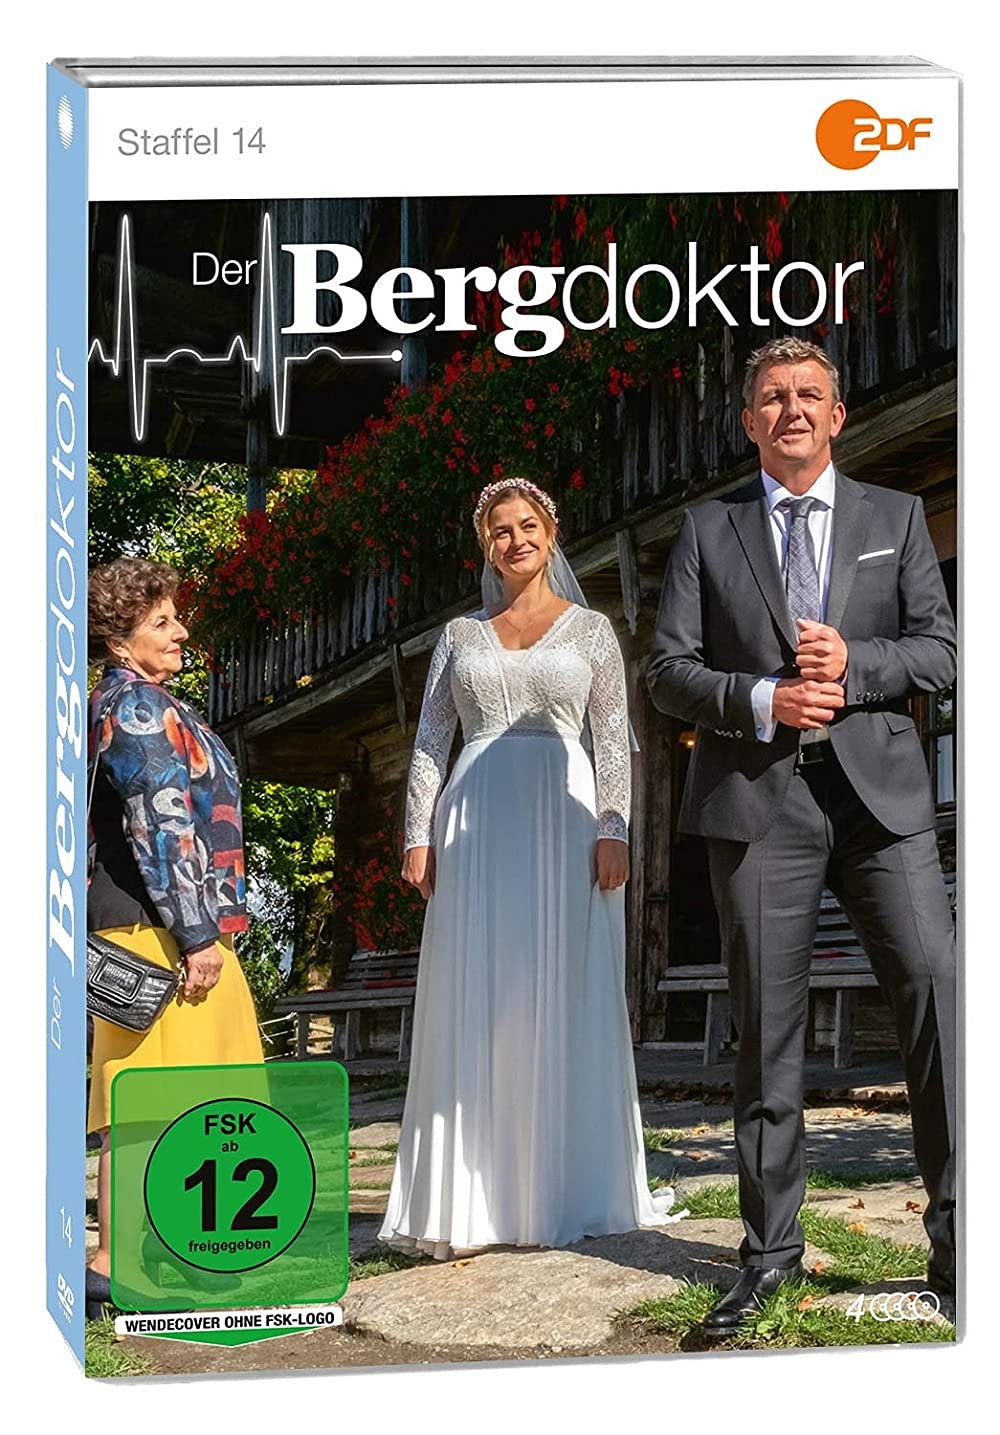 Der Bergdoktor Staffel 1-15 (1-10 Box und Staffel 11+12+13+14+15) Folgen 1-136